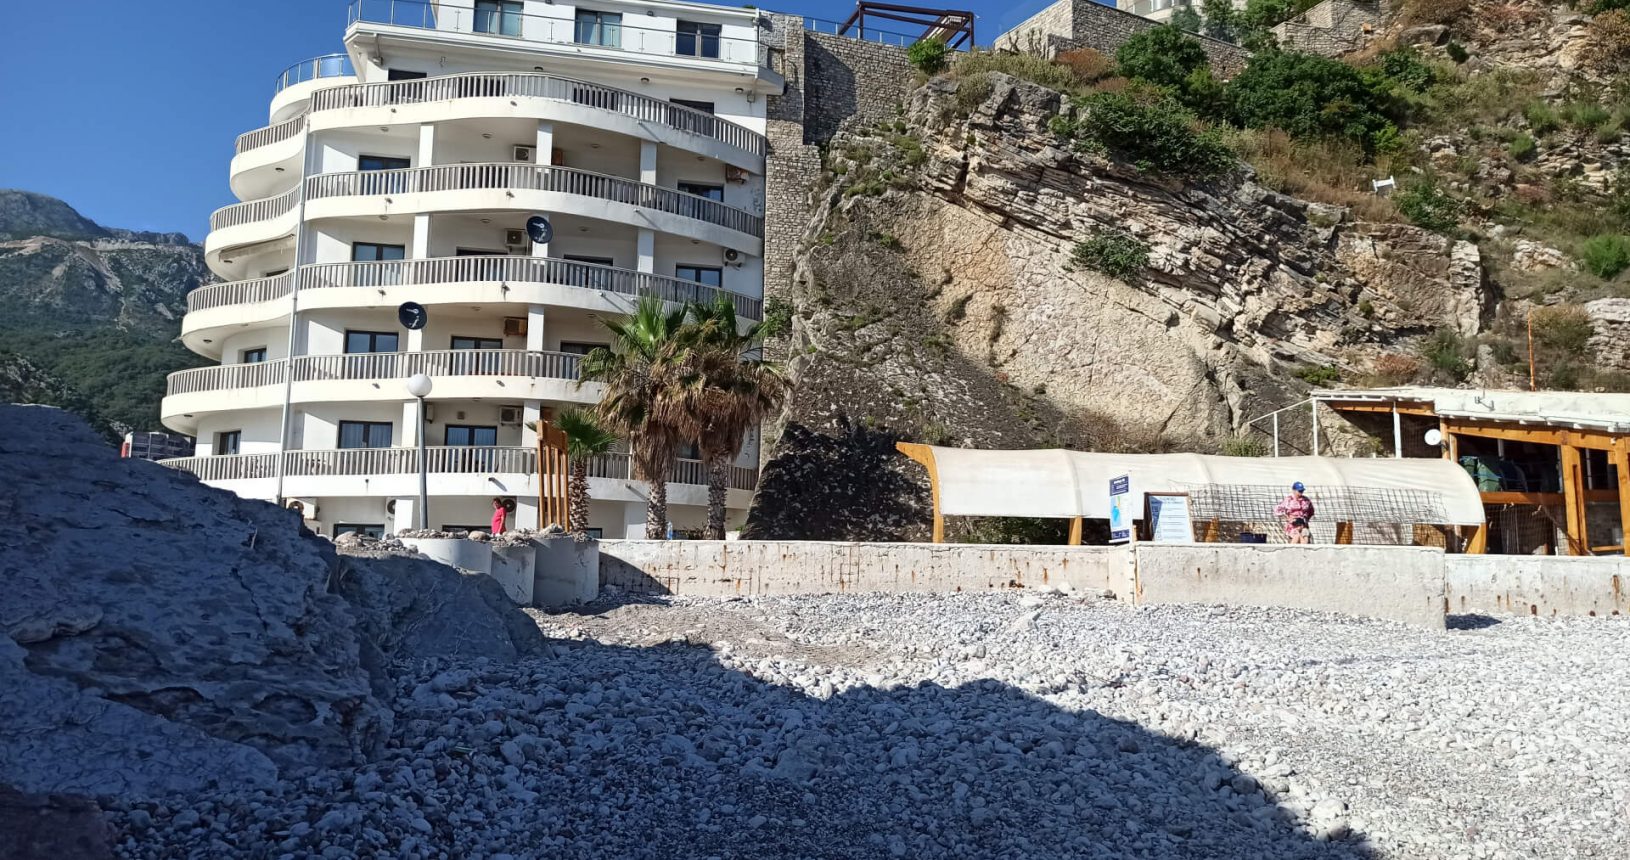 Rafailovici rocky beach cafe and buildings